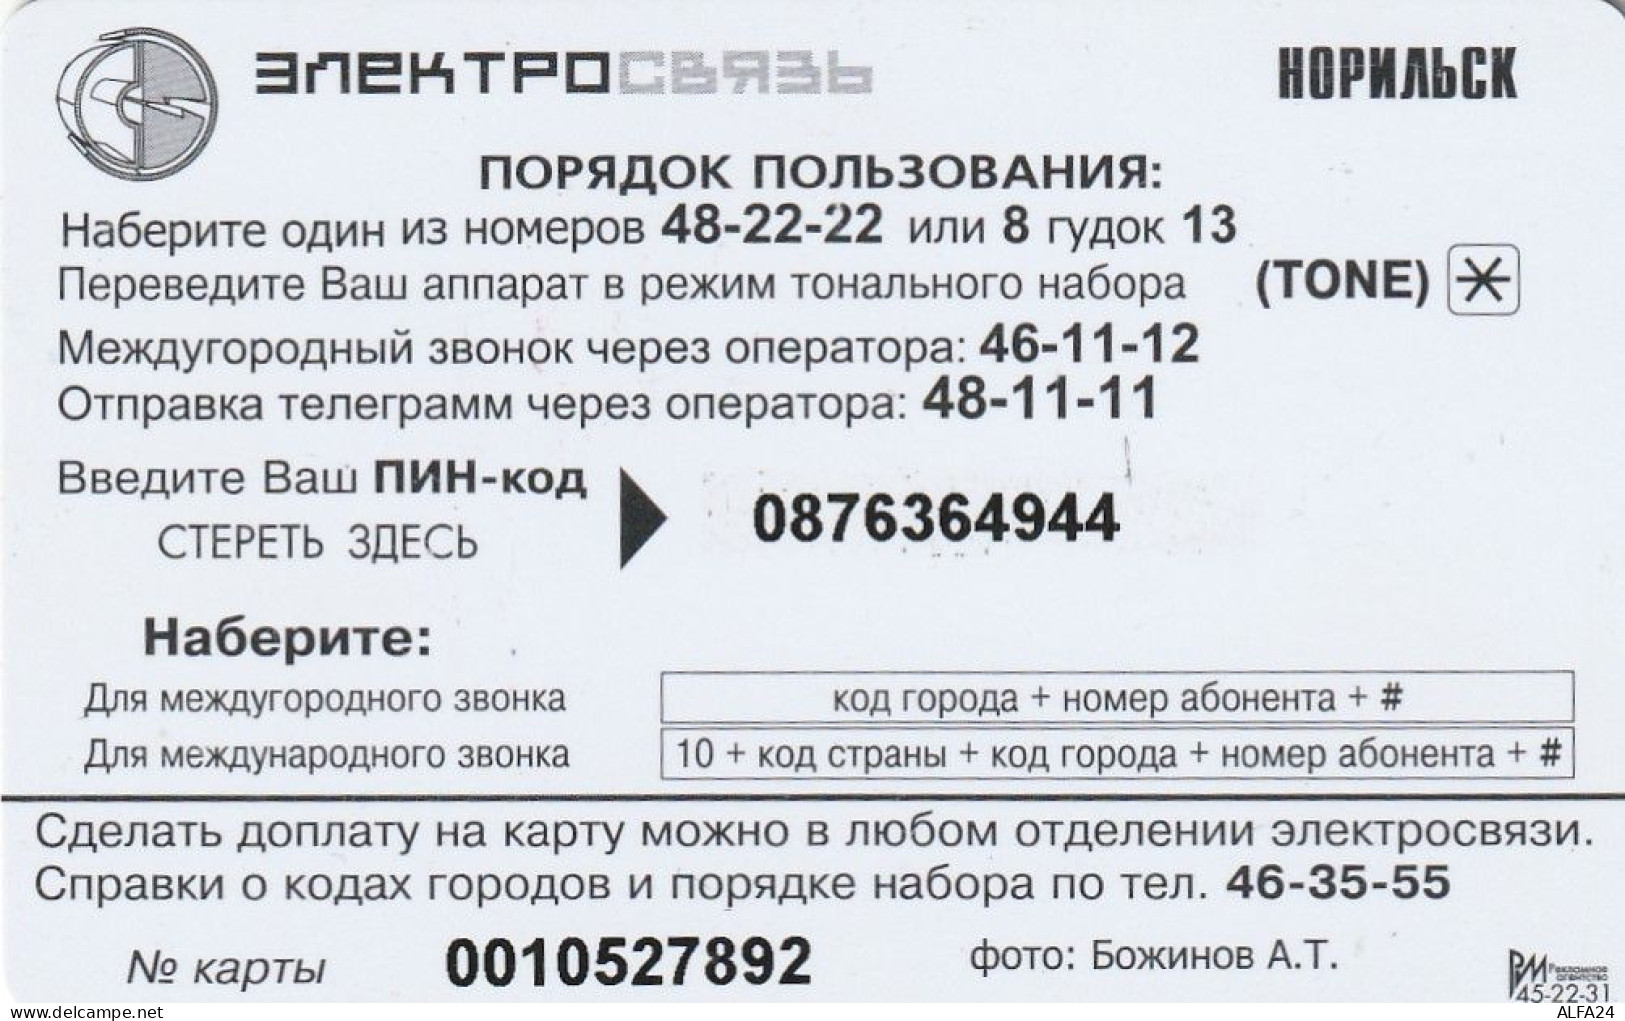 PREPAID PHONE CARD RUSSIA Sibirtelecom - Norilsk, Krasnoyarsk Region CTK (CZ360 - Russia